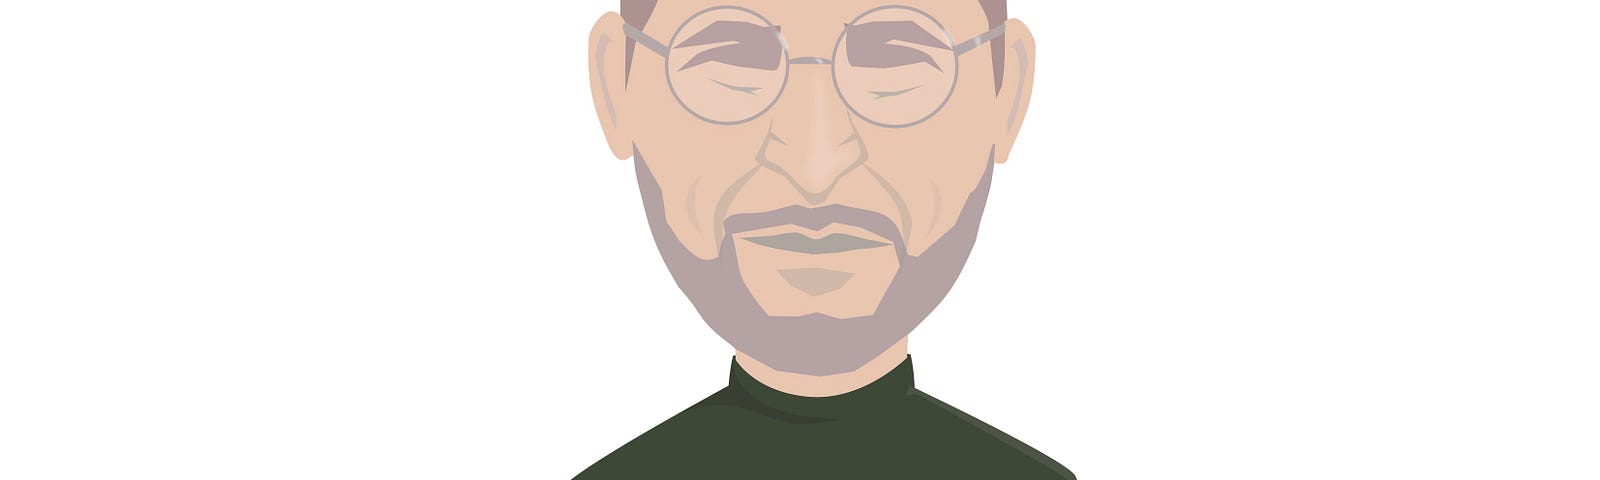 A cartoon of Steve Jobs